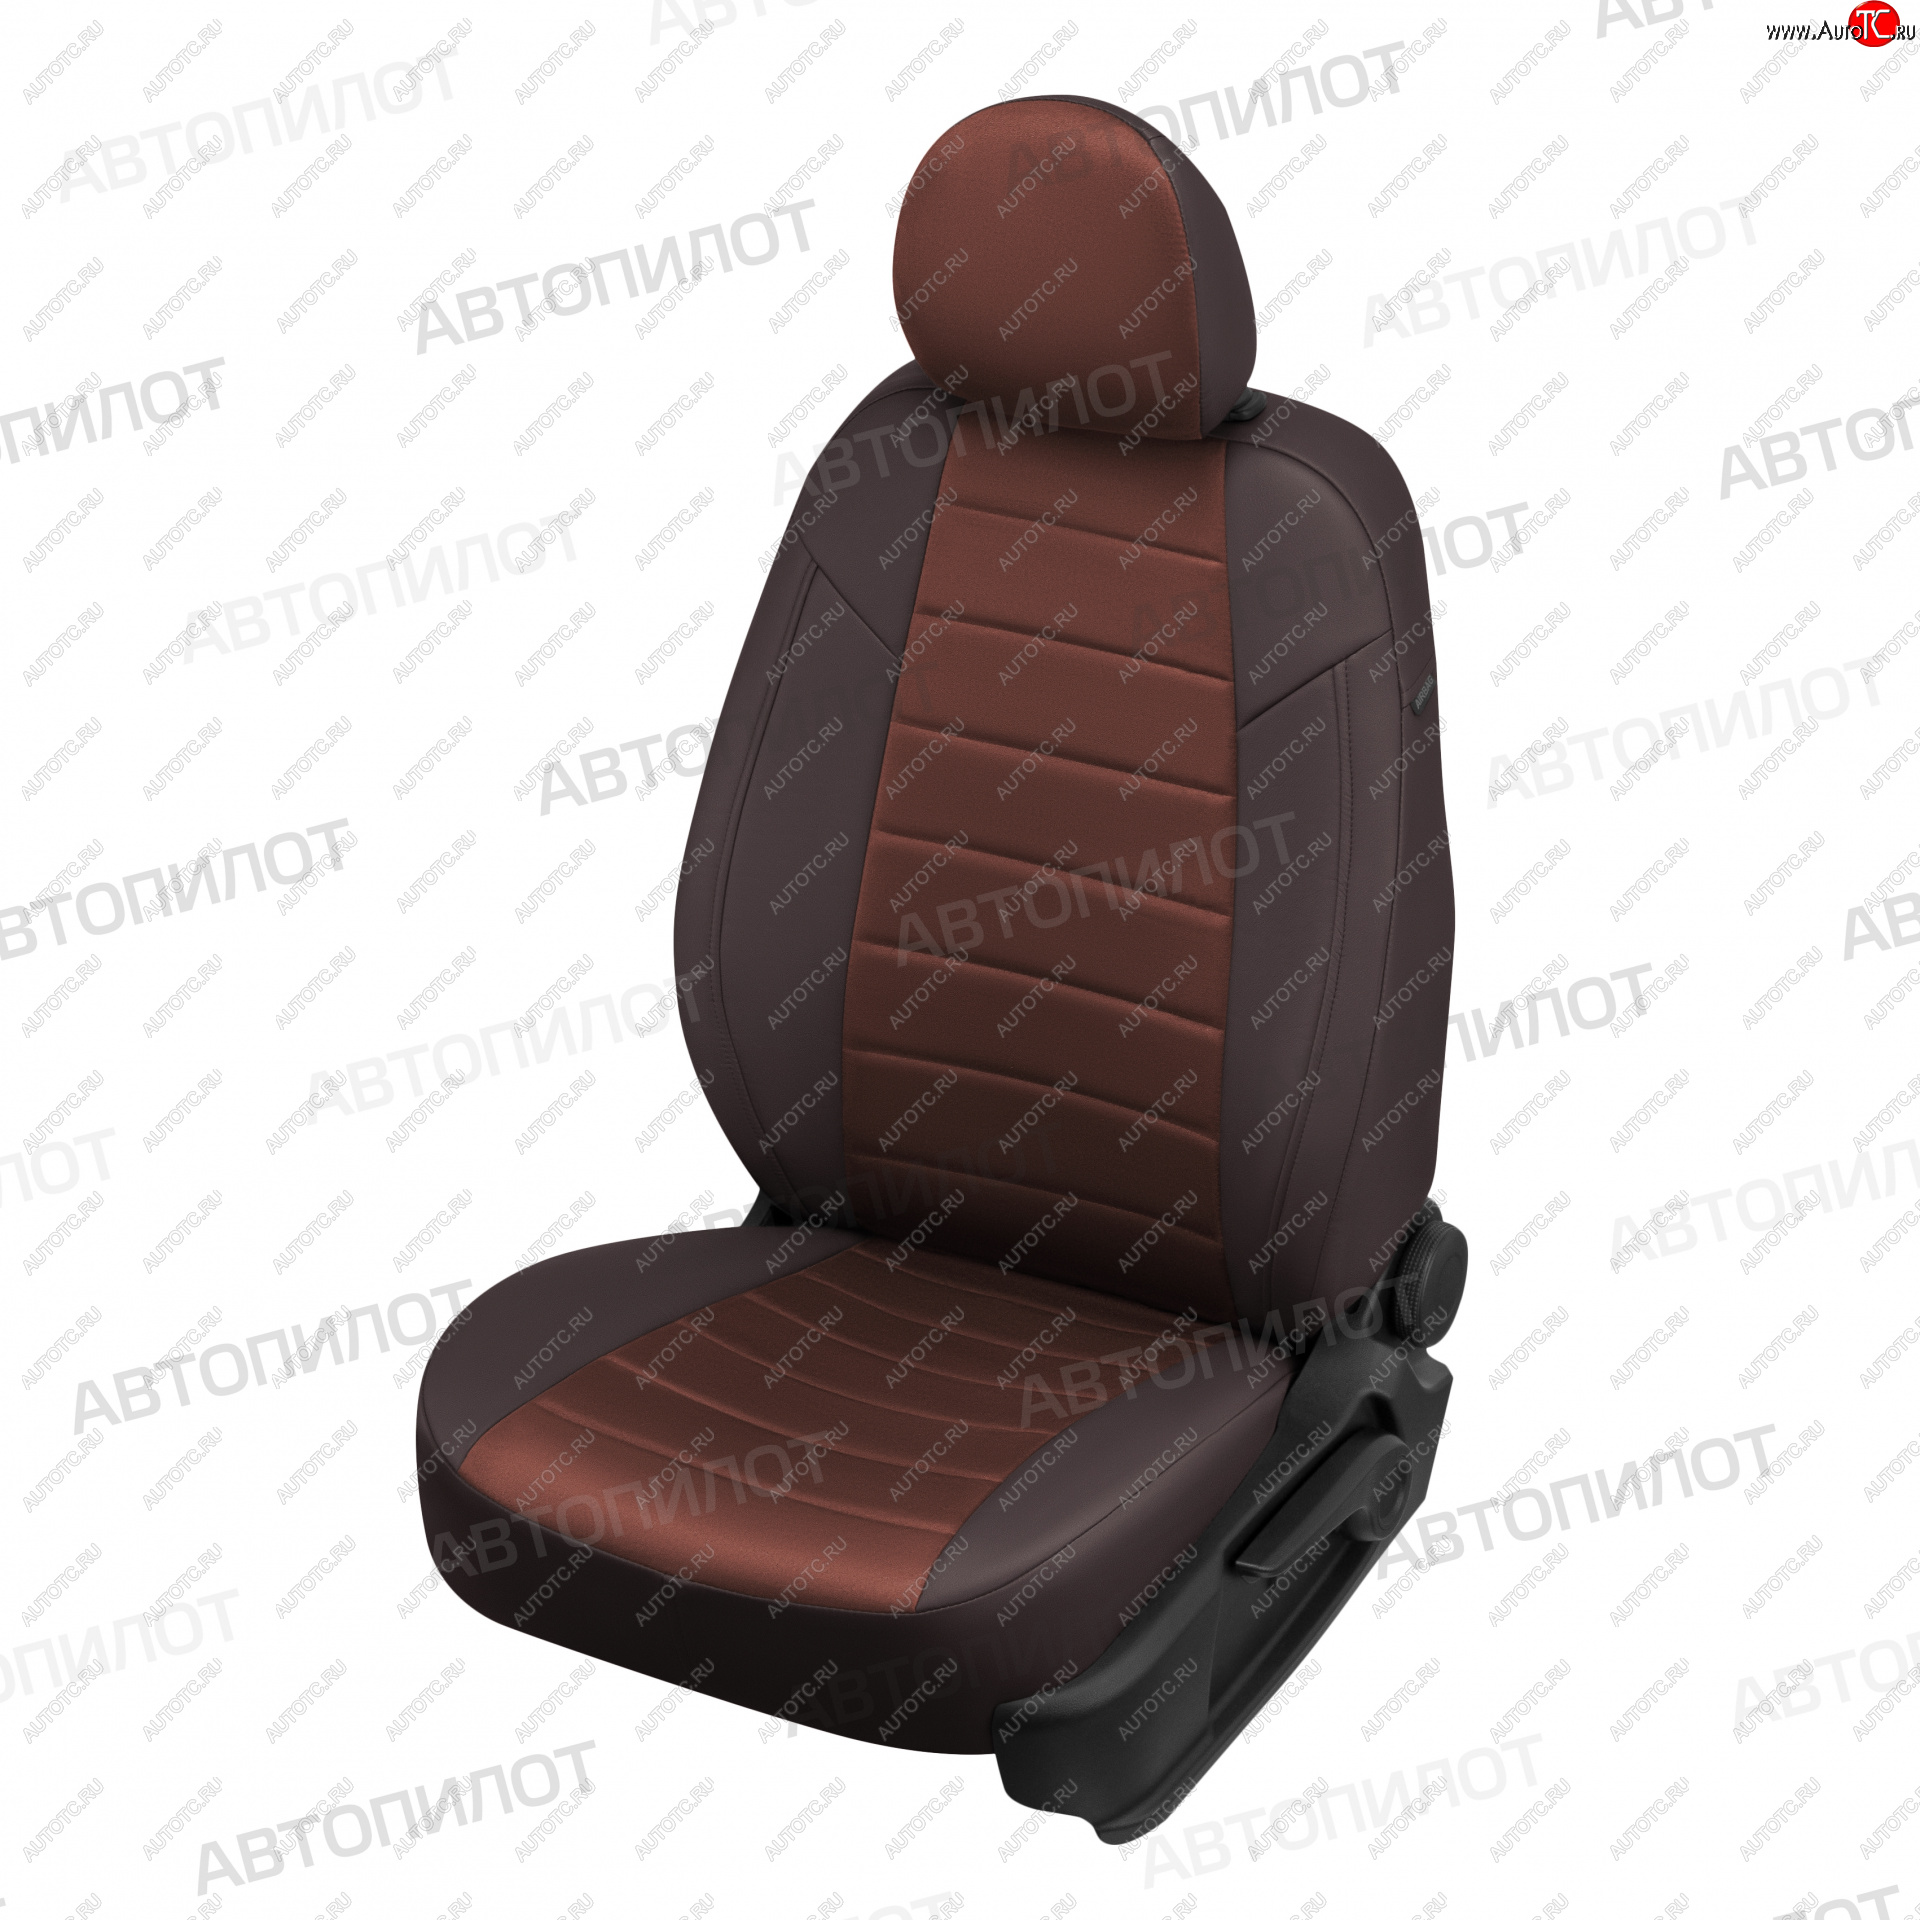 13 449 р. Чехлы сидений (экокожа/алькантара) Автопилот  Ford S-Max  1 (2006-2015) (шоколад)